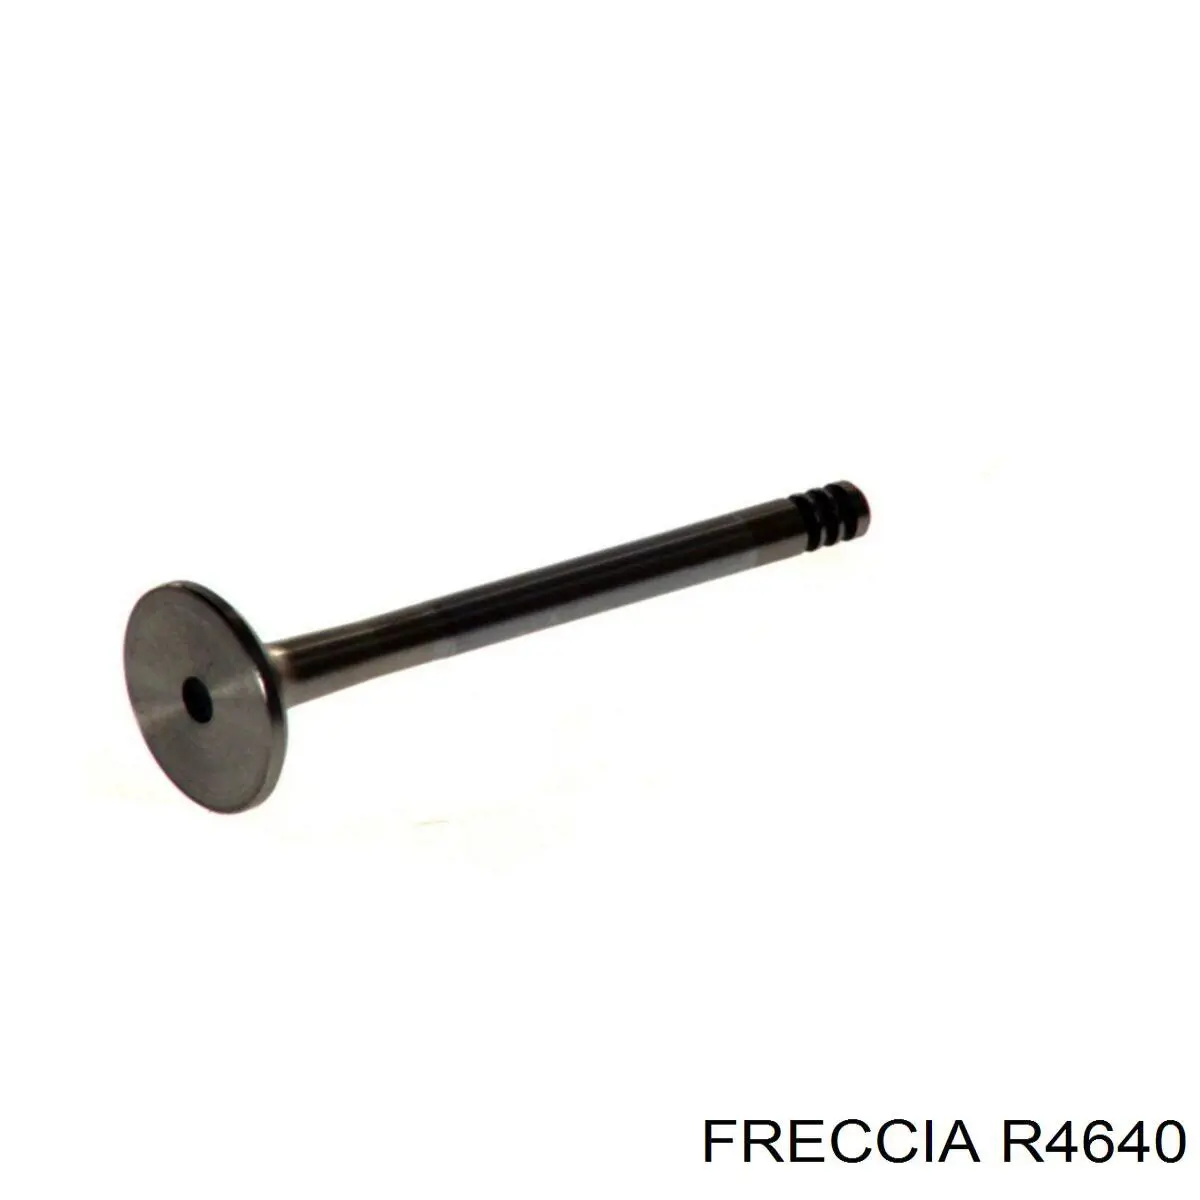 R4640 Freccia клапан выпускной